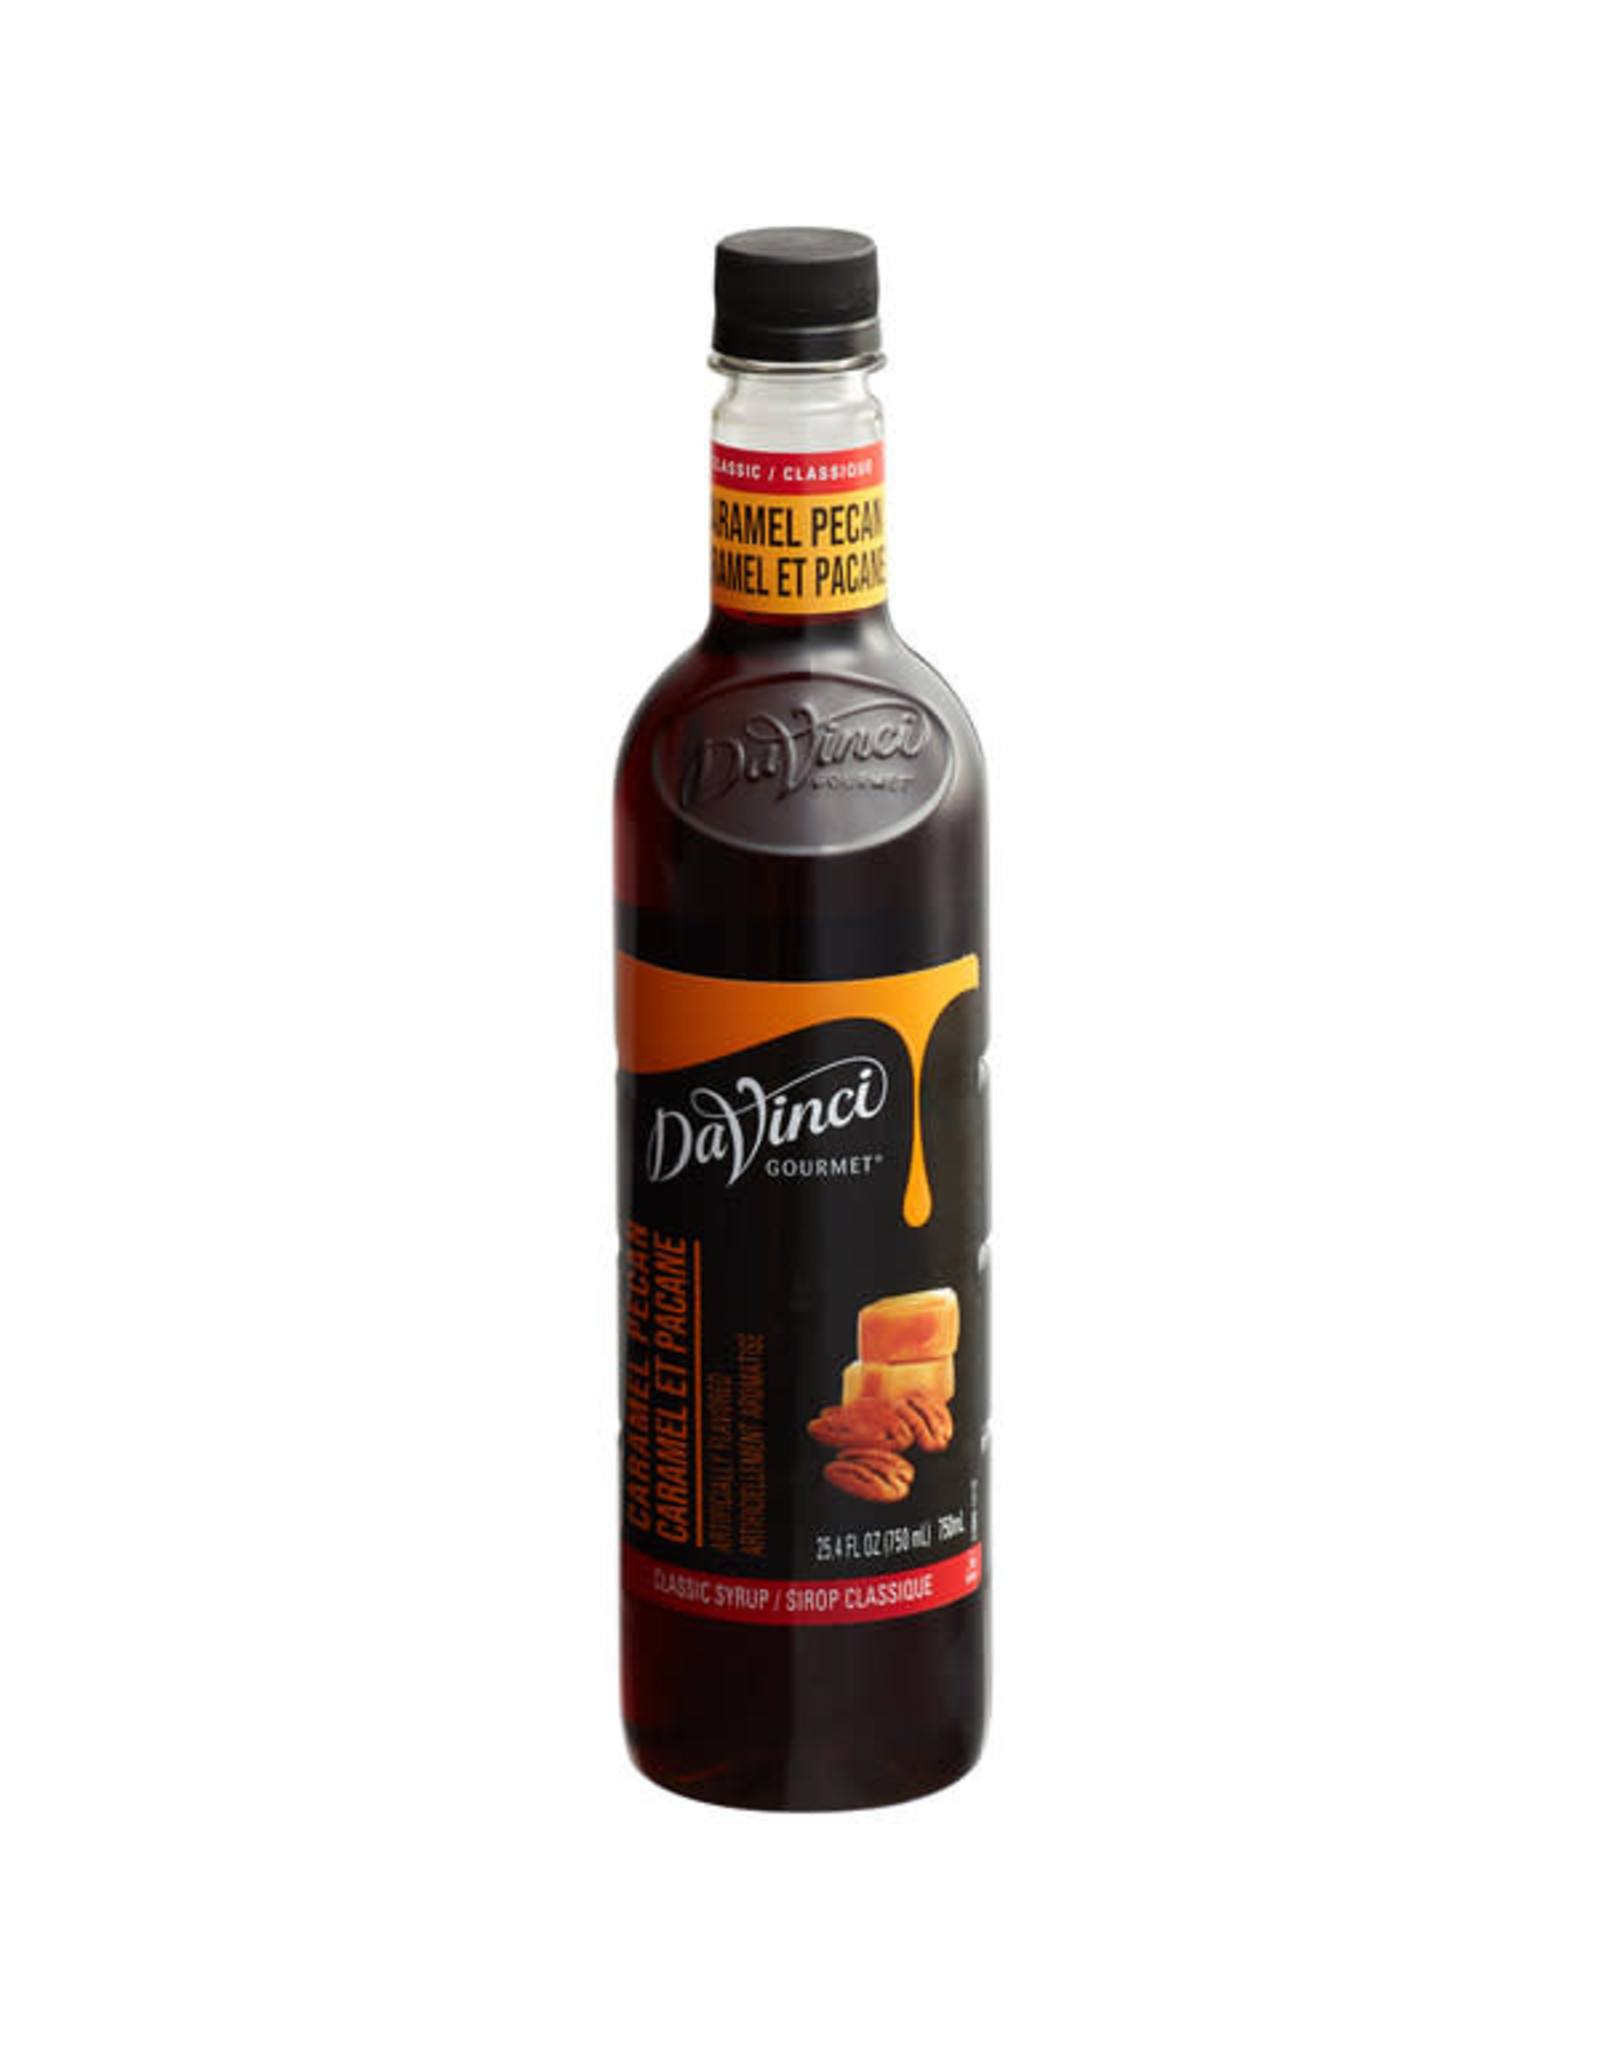 Da Vinci DaVinci gourmet - Caramel pacane